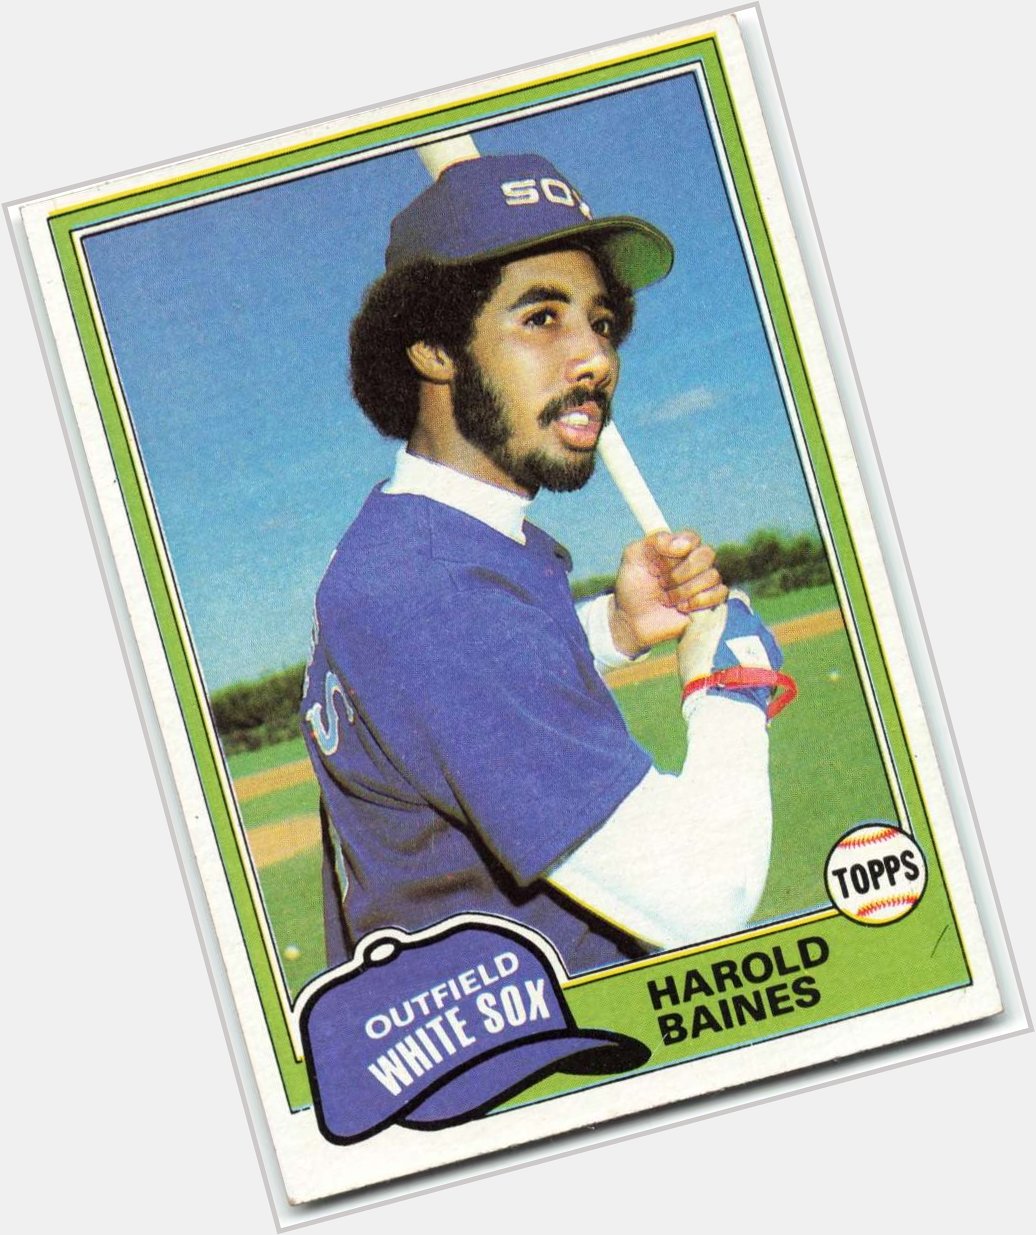 1981 Topps Harold Baines rookie card. Happy birthday Mr. Baines  